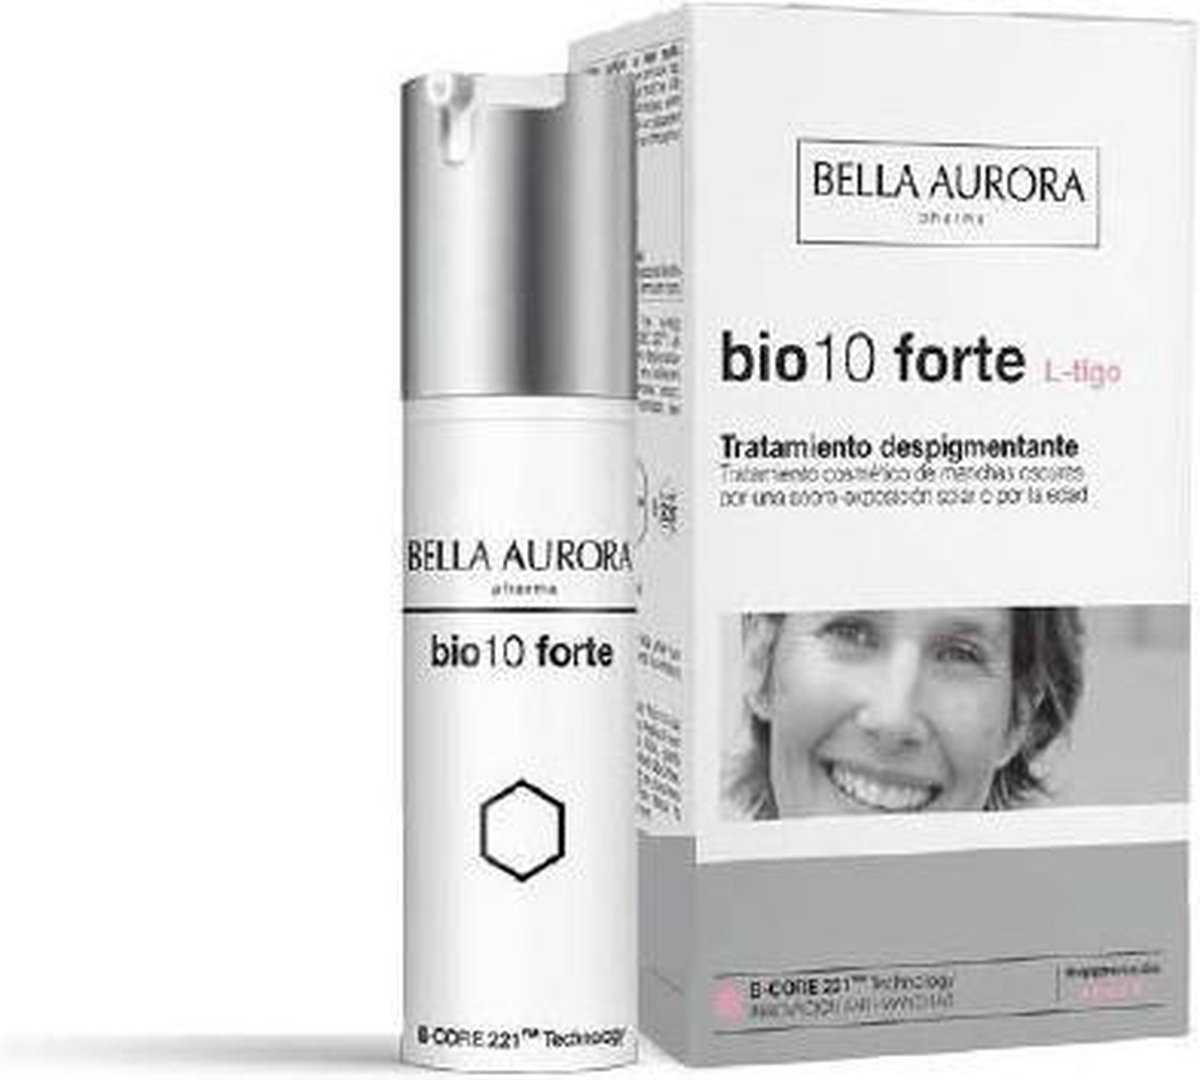 Tratamiento Despigmentante Bio10 Forte Pharma L-tigo Bella Aurora